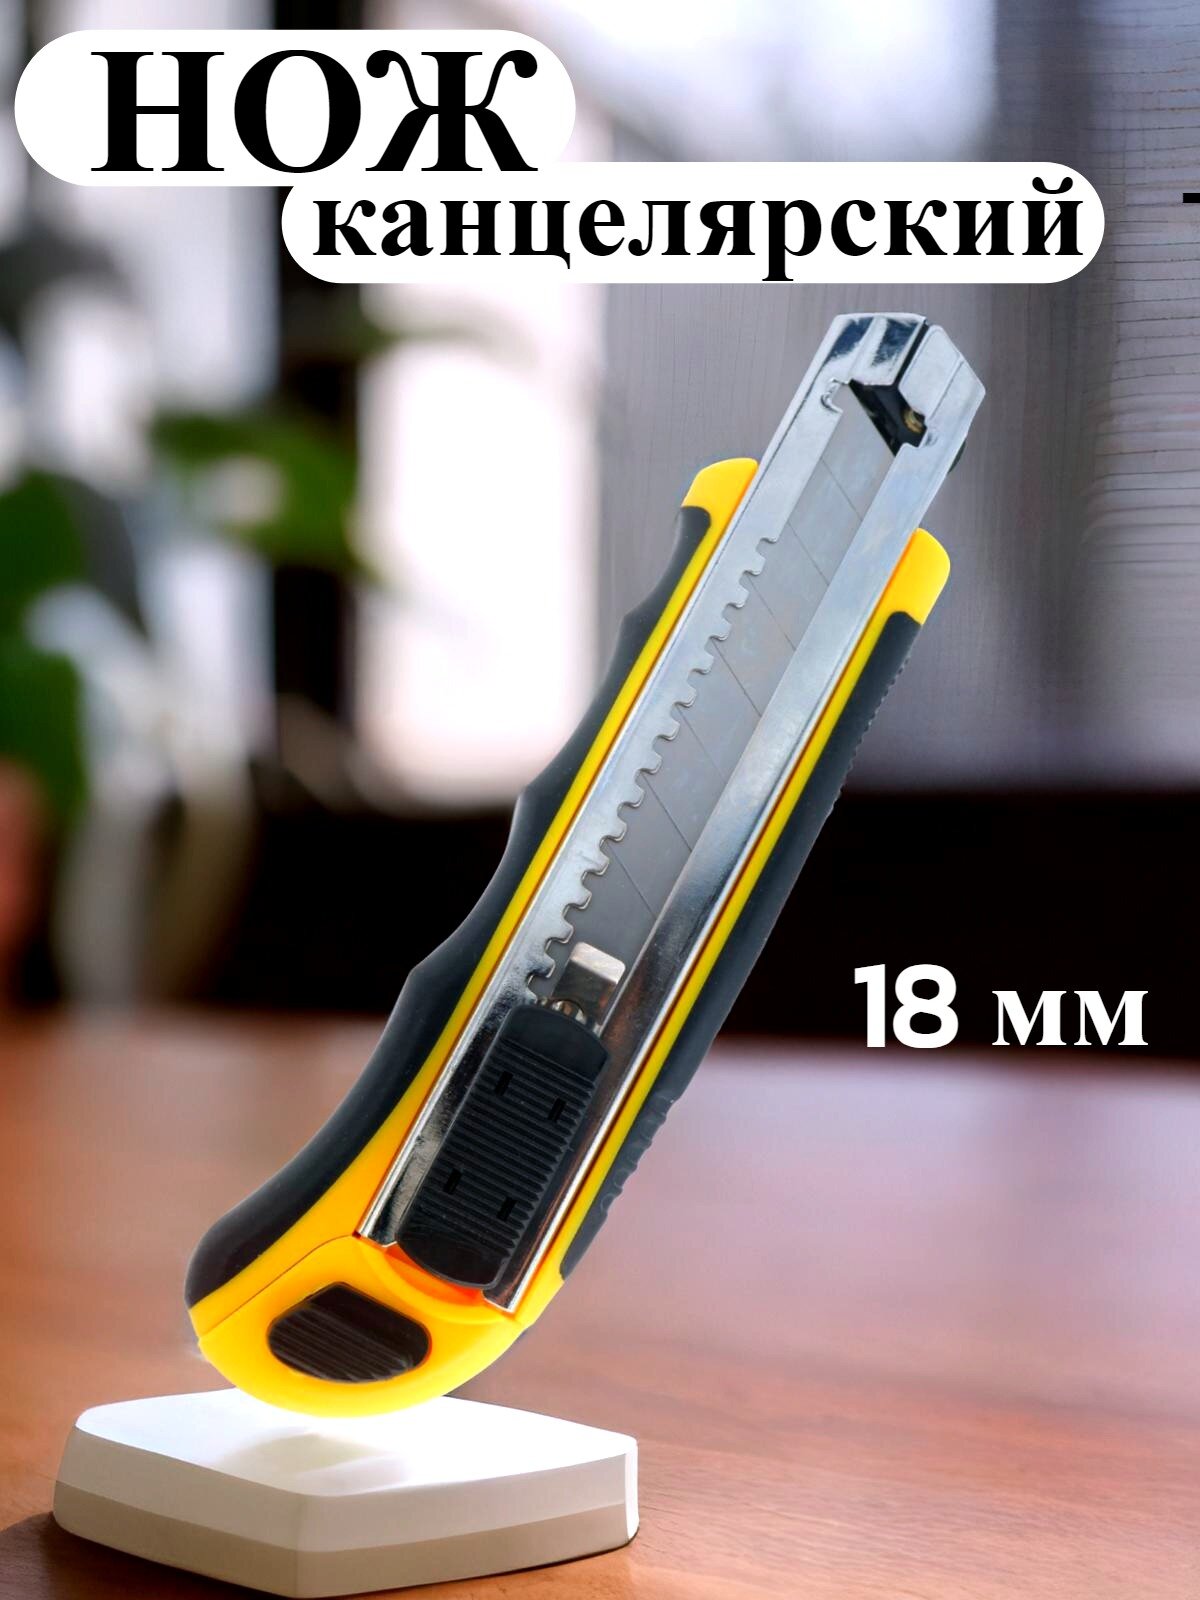 Нож канцелярский 18 мм Workmate металлические направляющие автофиксатор автоподача лезвия 5 лезвий